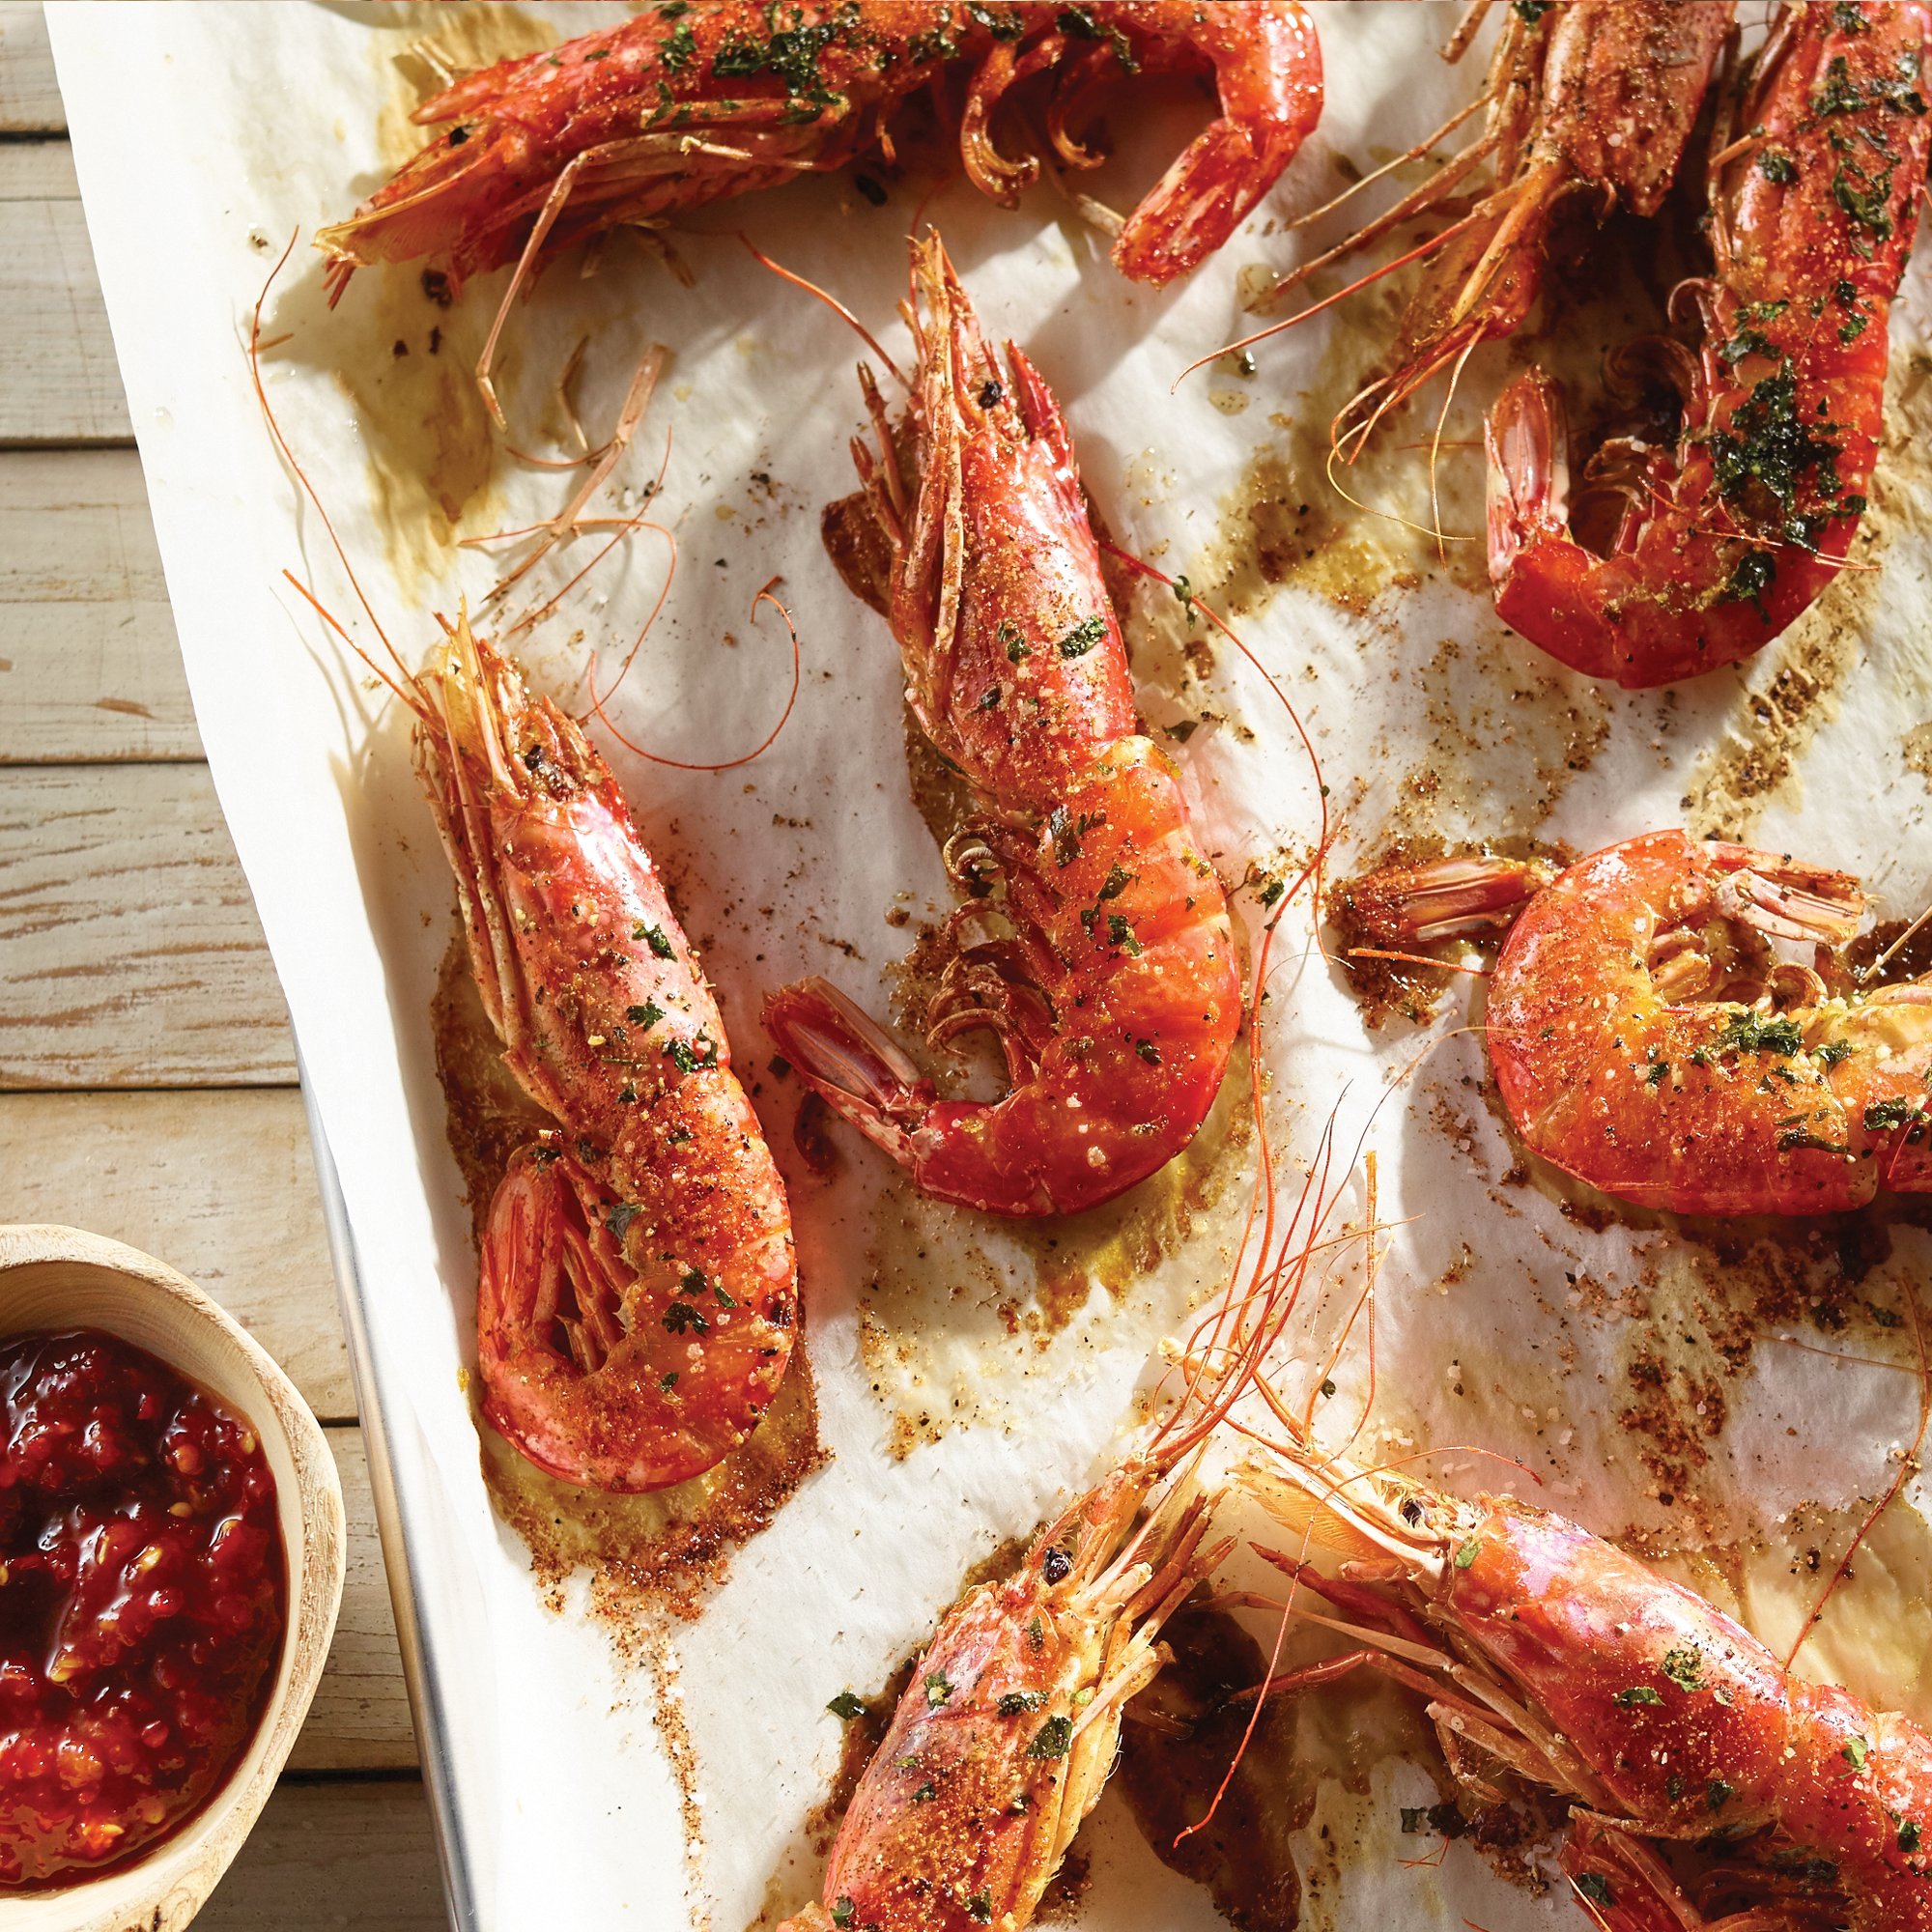 https://images.heb.com/is/image/HEBGrocery/Test/mi-tienda-spice-roasted-shrimp-recipe.jpg